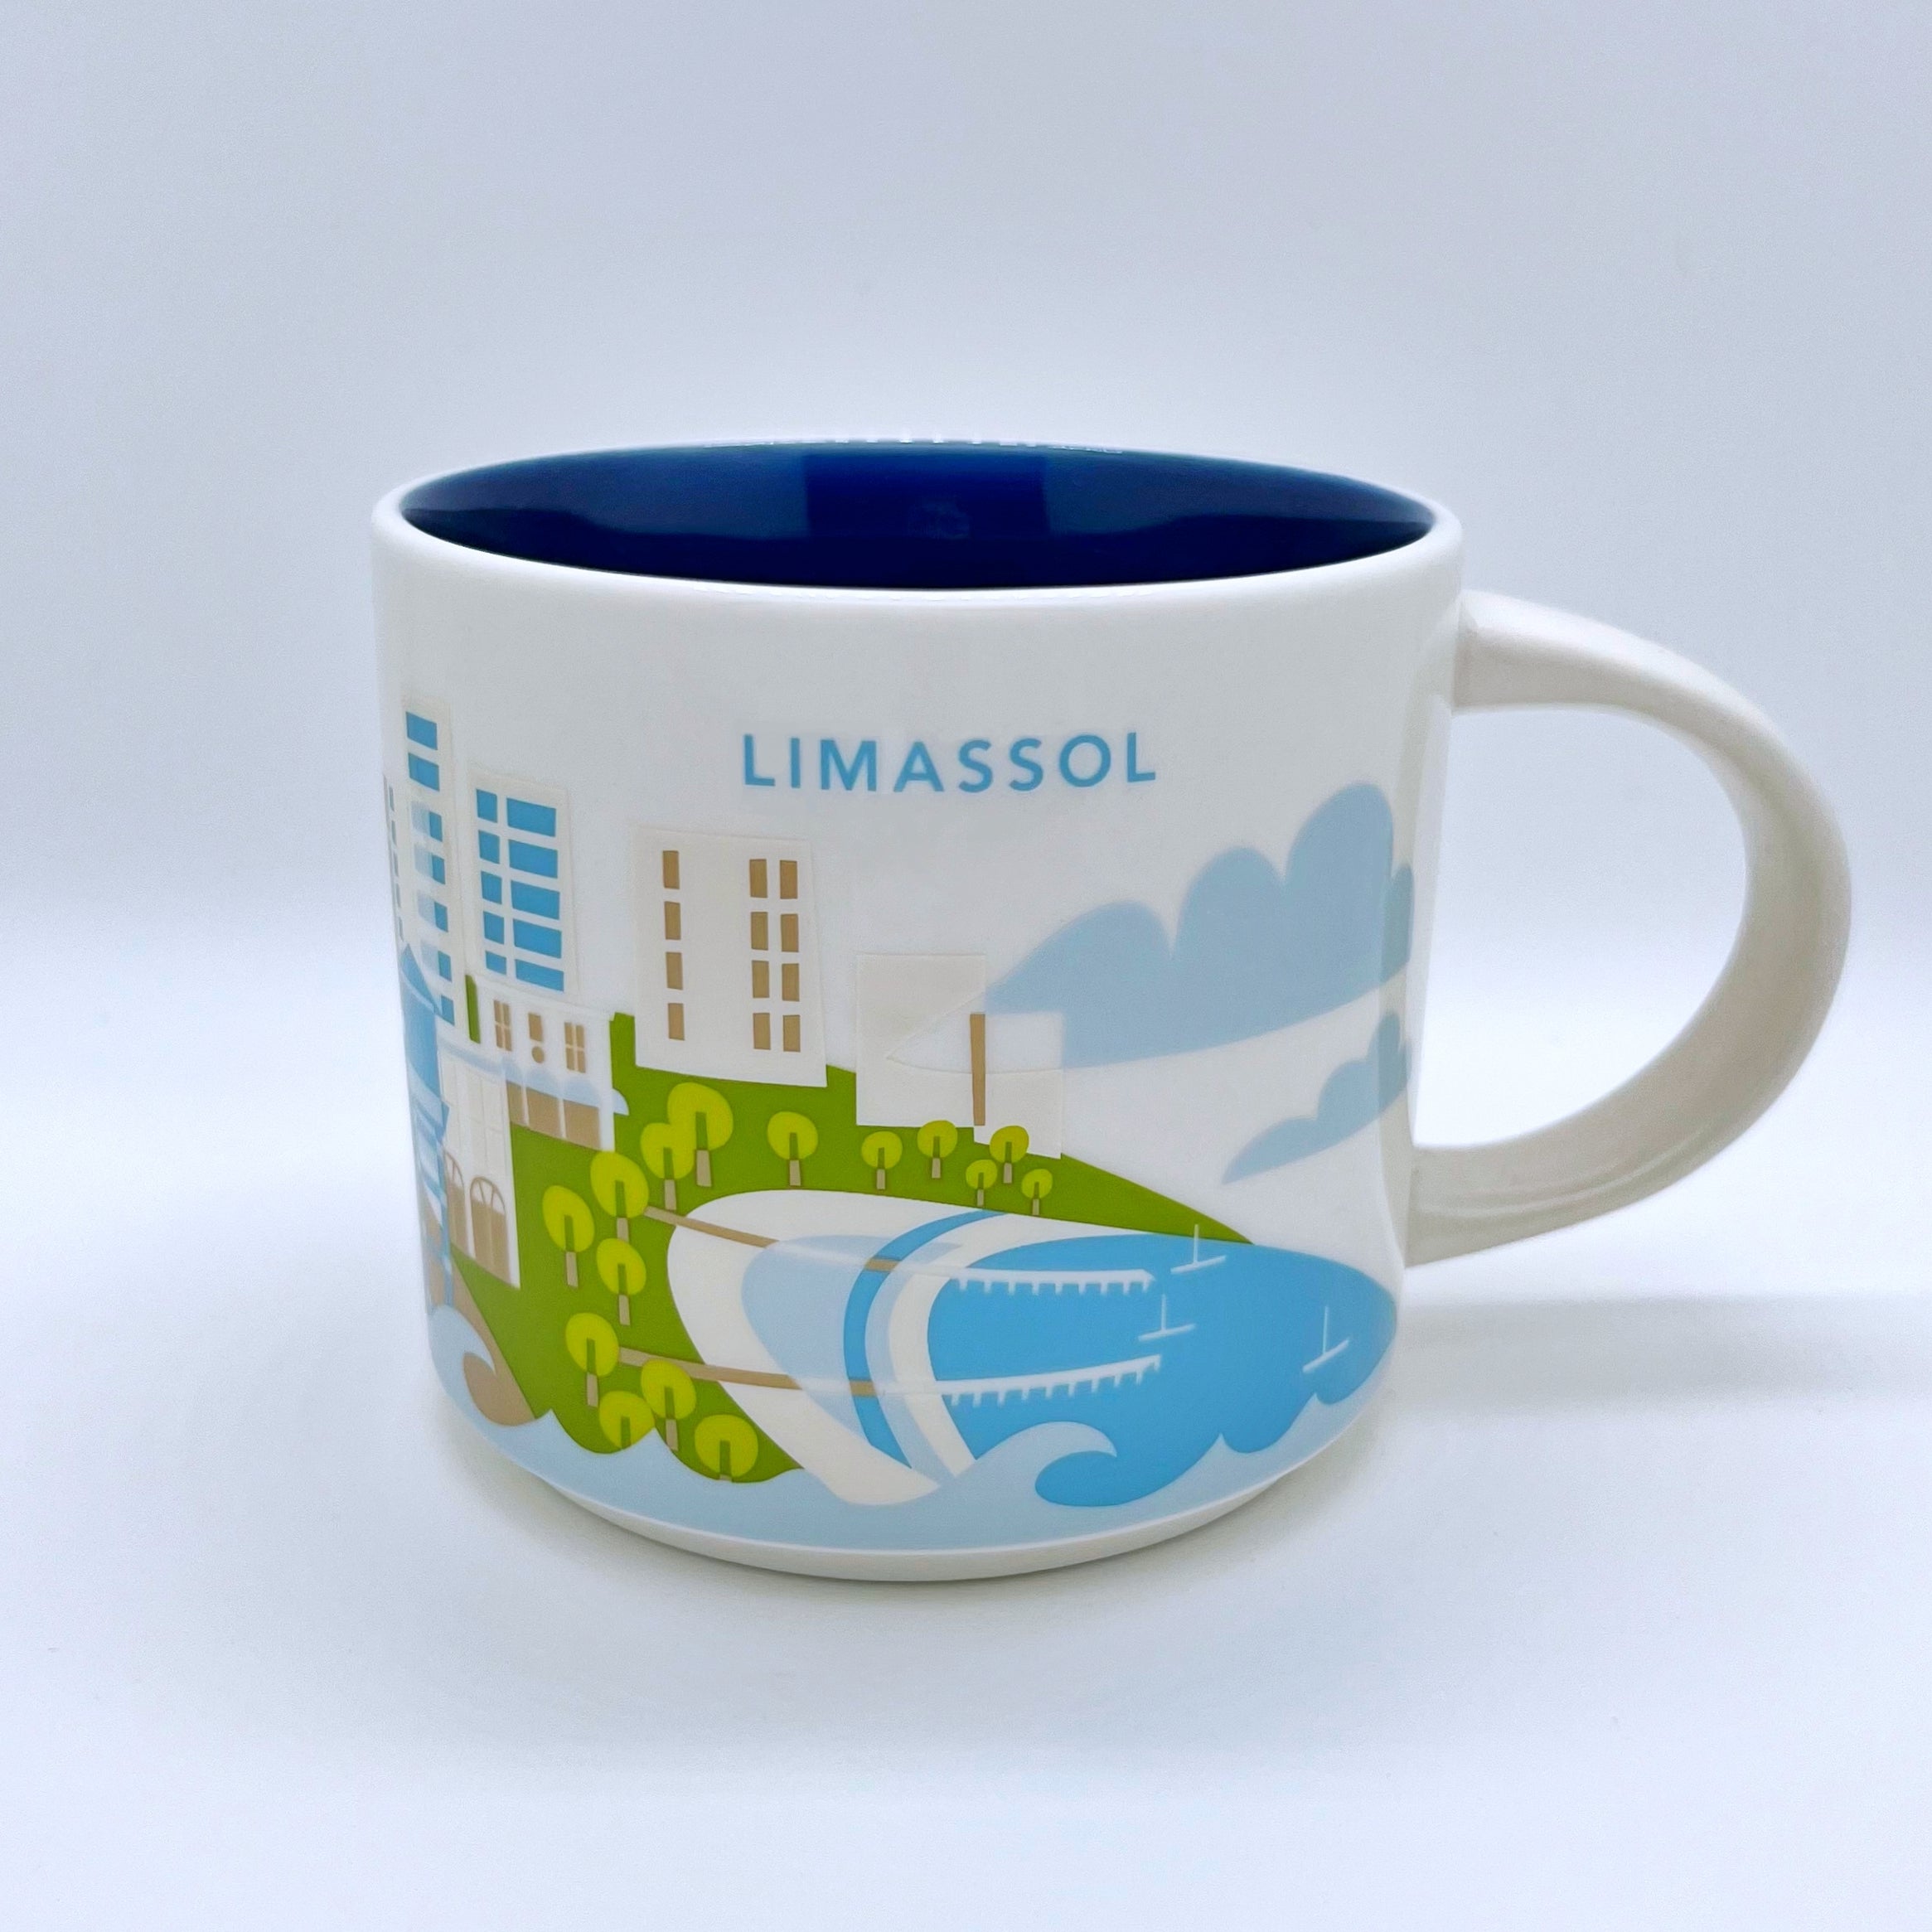 Limassol City Kaffee Tasse